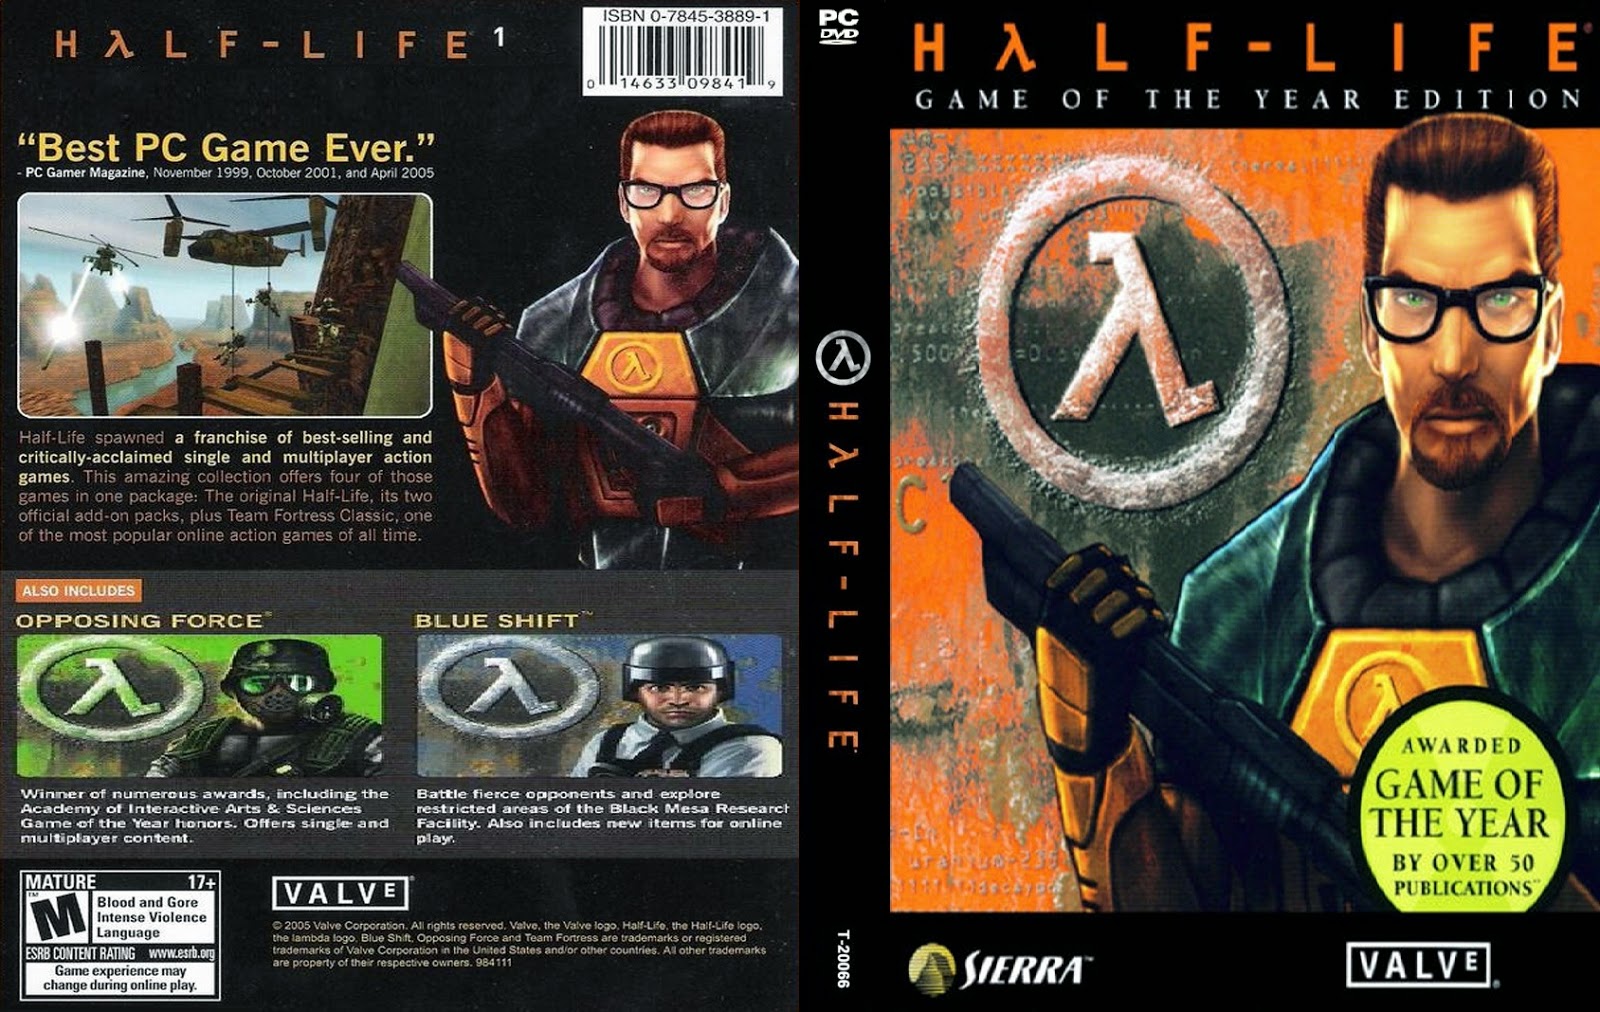 Анонс half life. Half Life 1 обложка. Half Life 1998 обложка. Half Life 1 обложка 1998 диск. PC Gamer 1999 обложка half-Life.